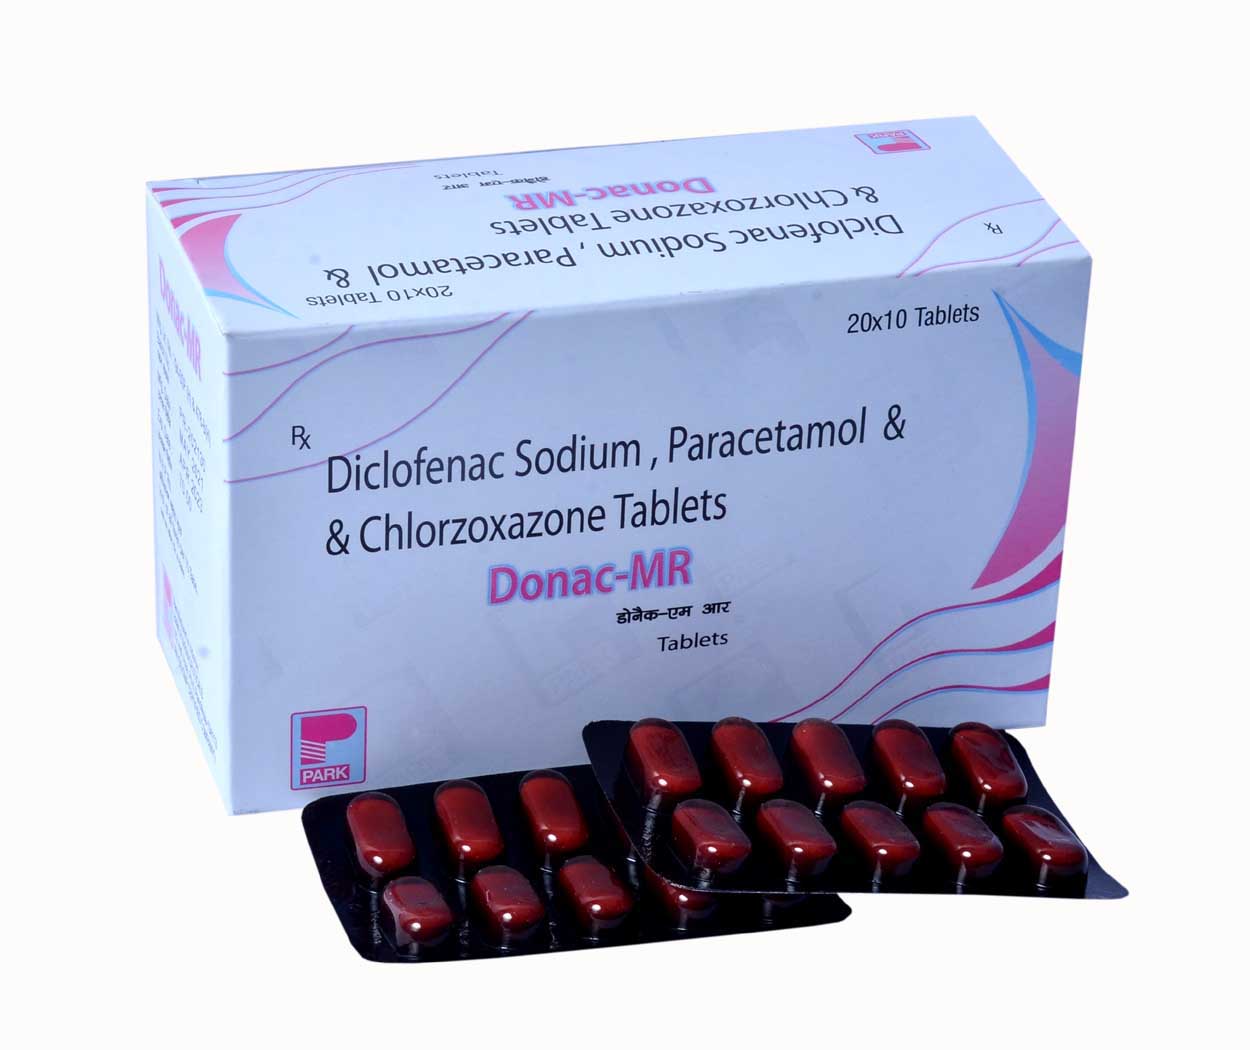 Product Name: Donac MR, Compositions of Donac MR are Diclofenac Sodium, Paracetamol & & Chlorzoxazone Tablets - Park Pharmaceuticals